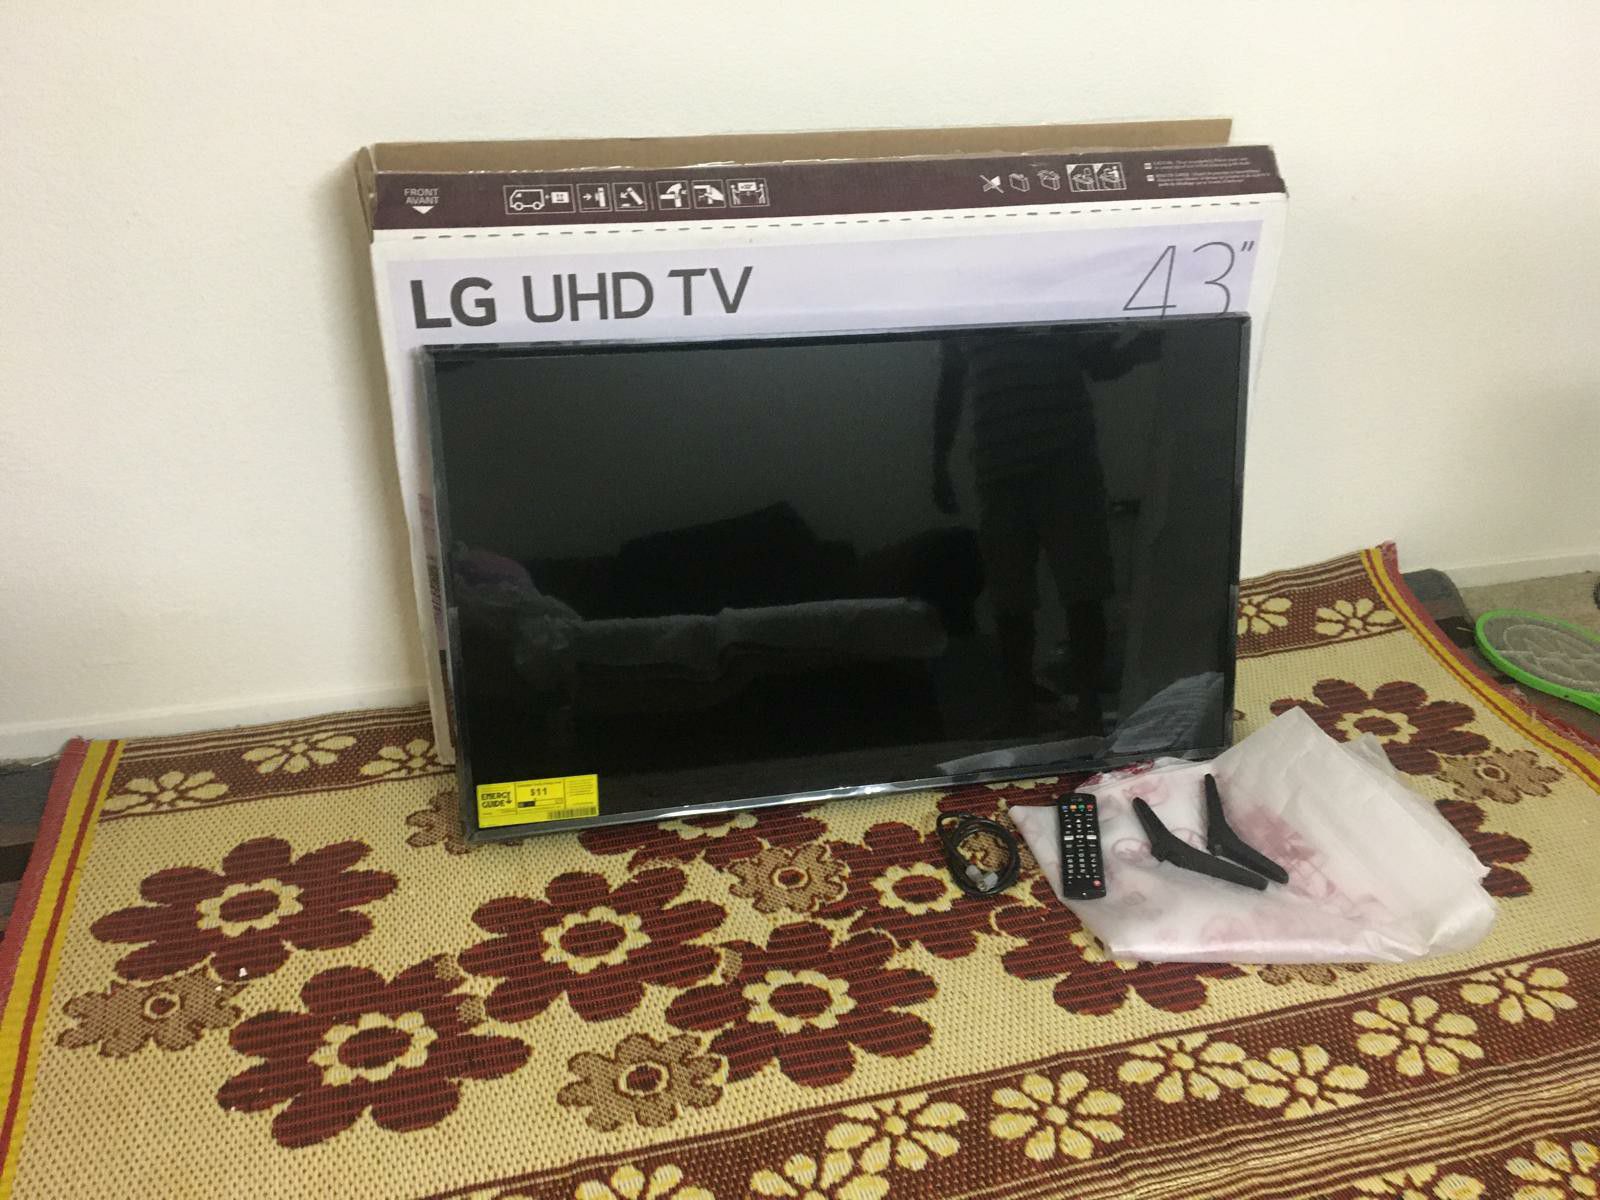 LG UHD TV - 43 " - new in original packaging